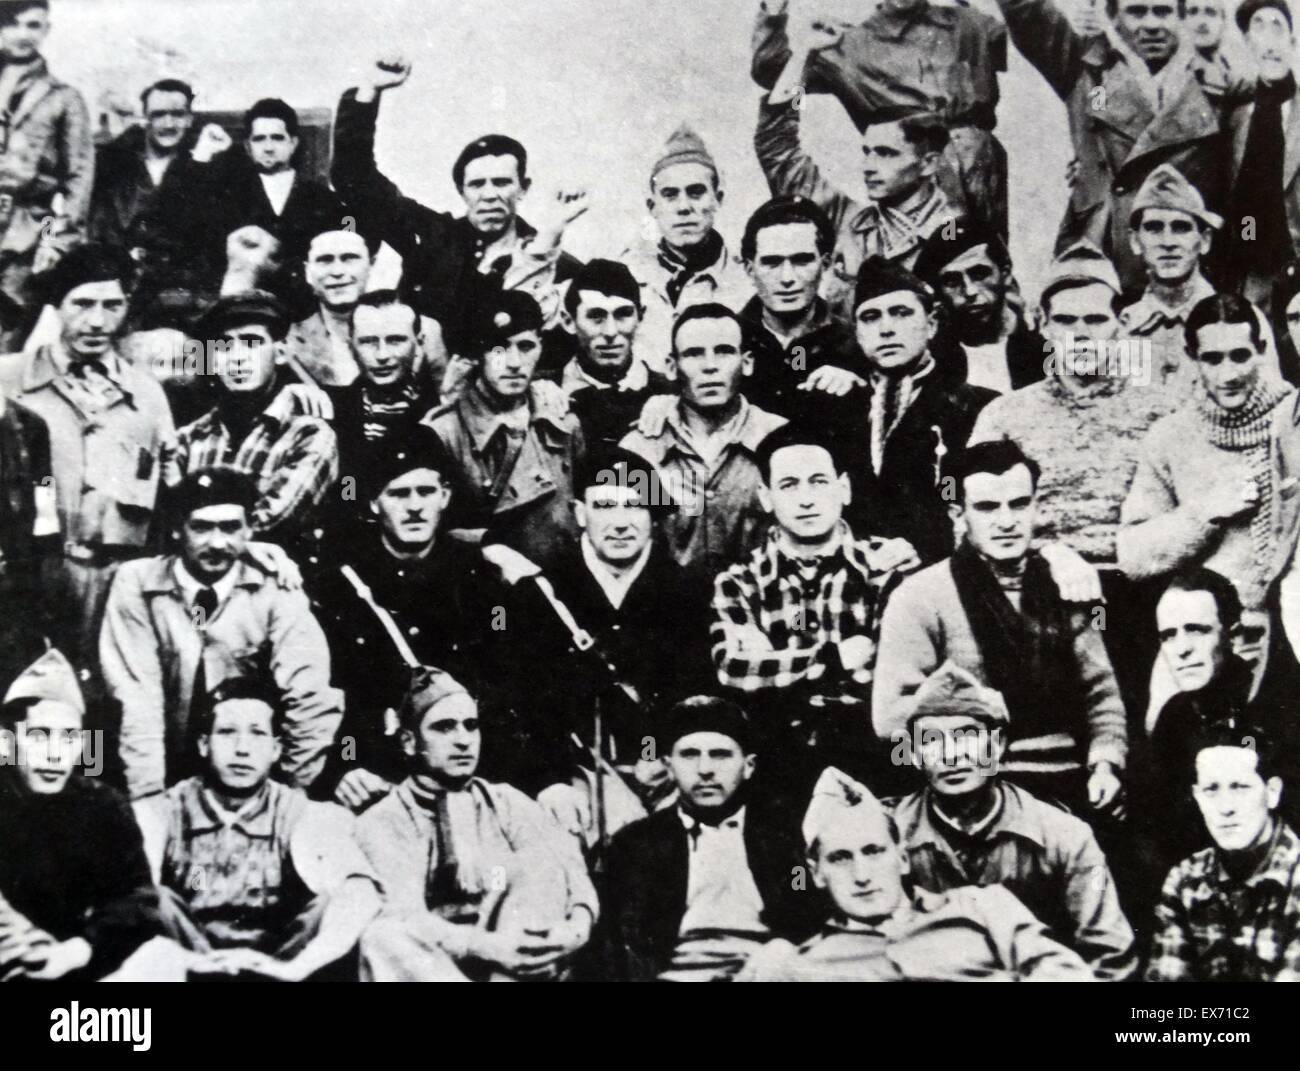 Garibaldi battalion of the 9th mixed brigade, part of the Italian International Brigade fighting during the Spanish Civil War, 1936' Stock Photo